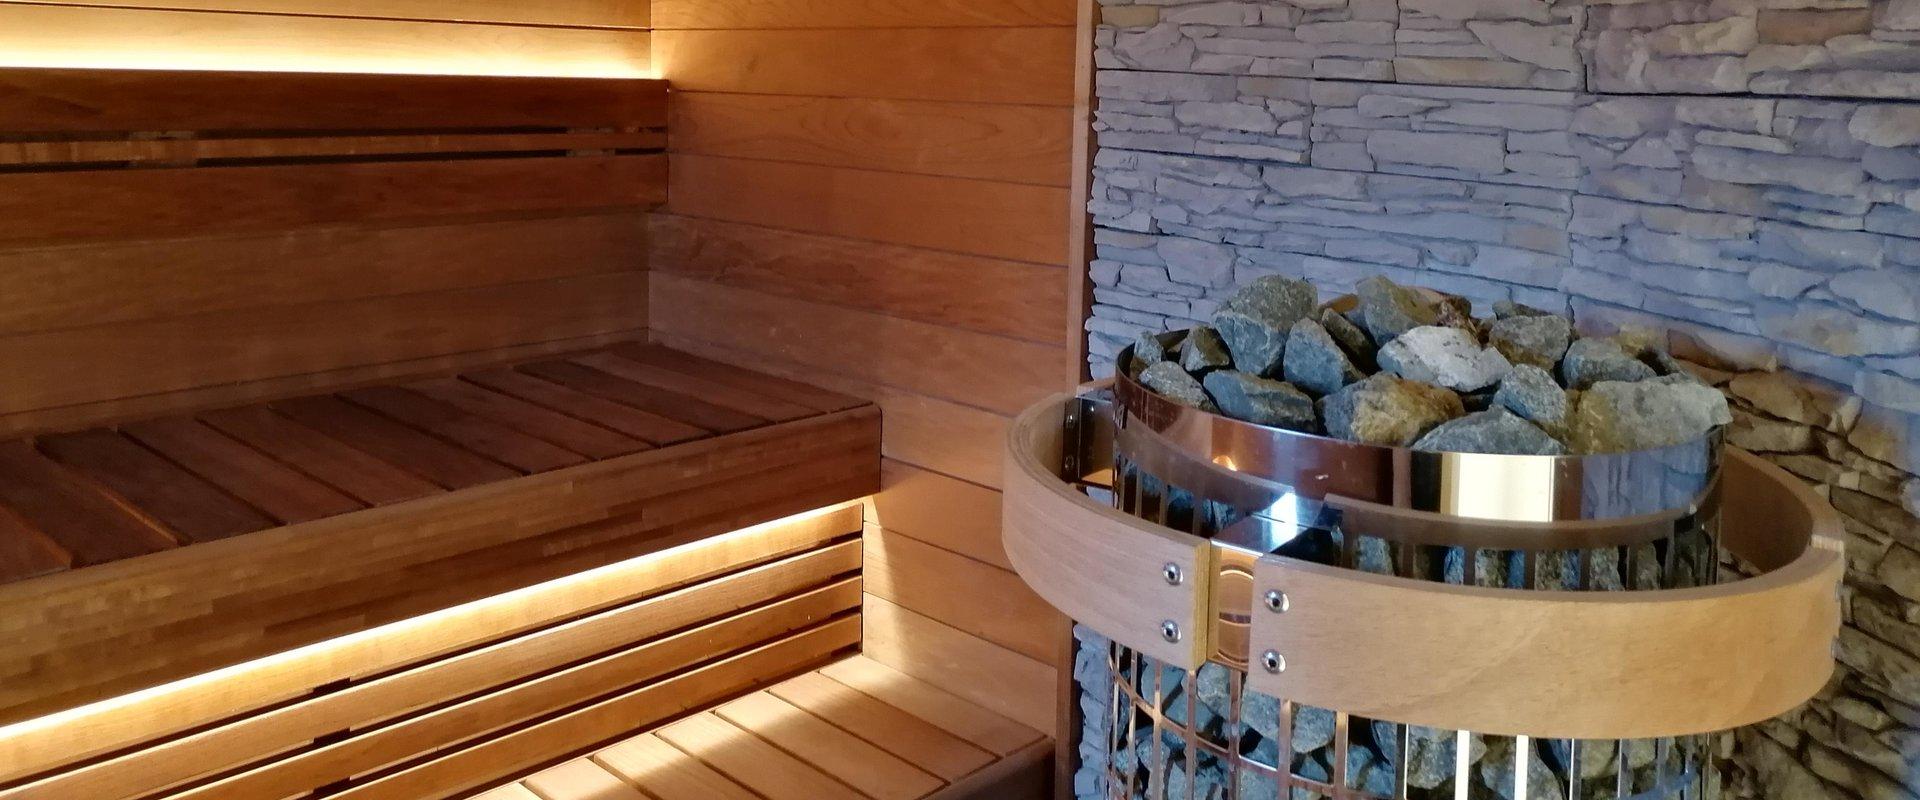 Farm sauna and bath barrels in Kõrvemaa